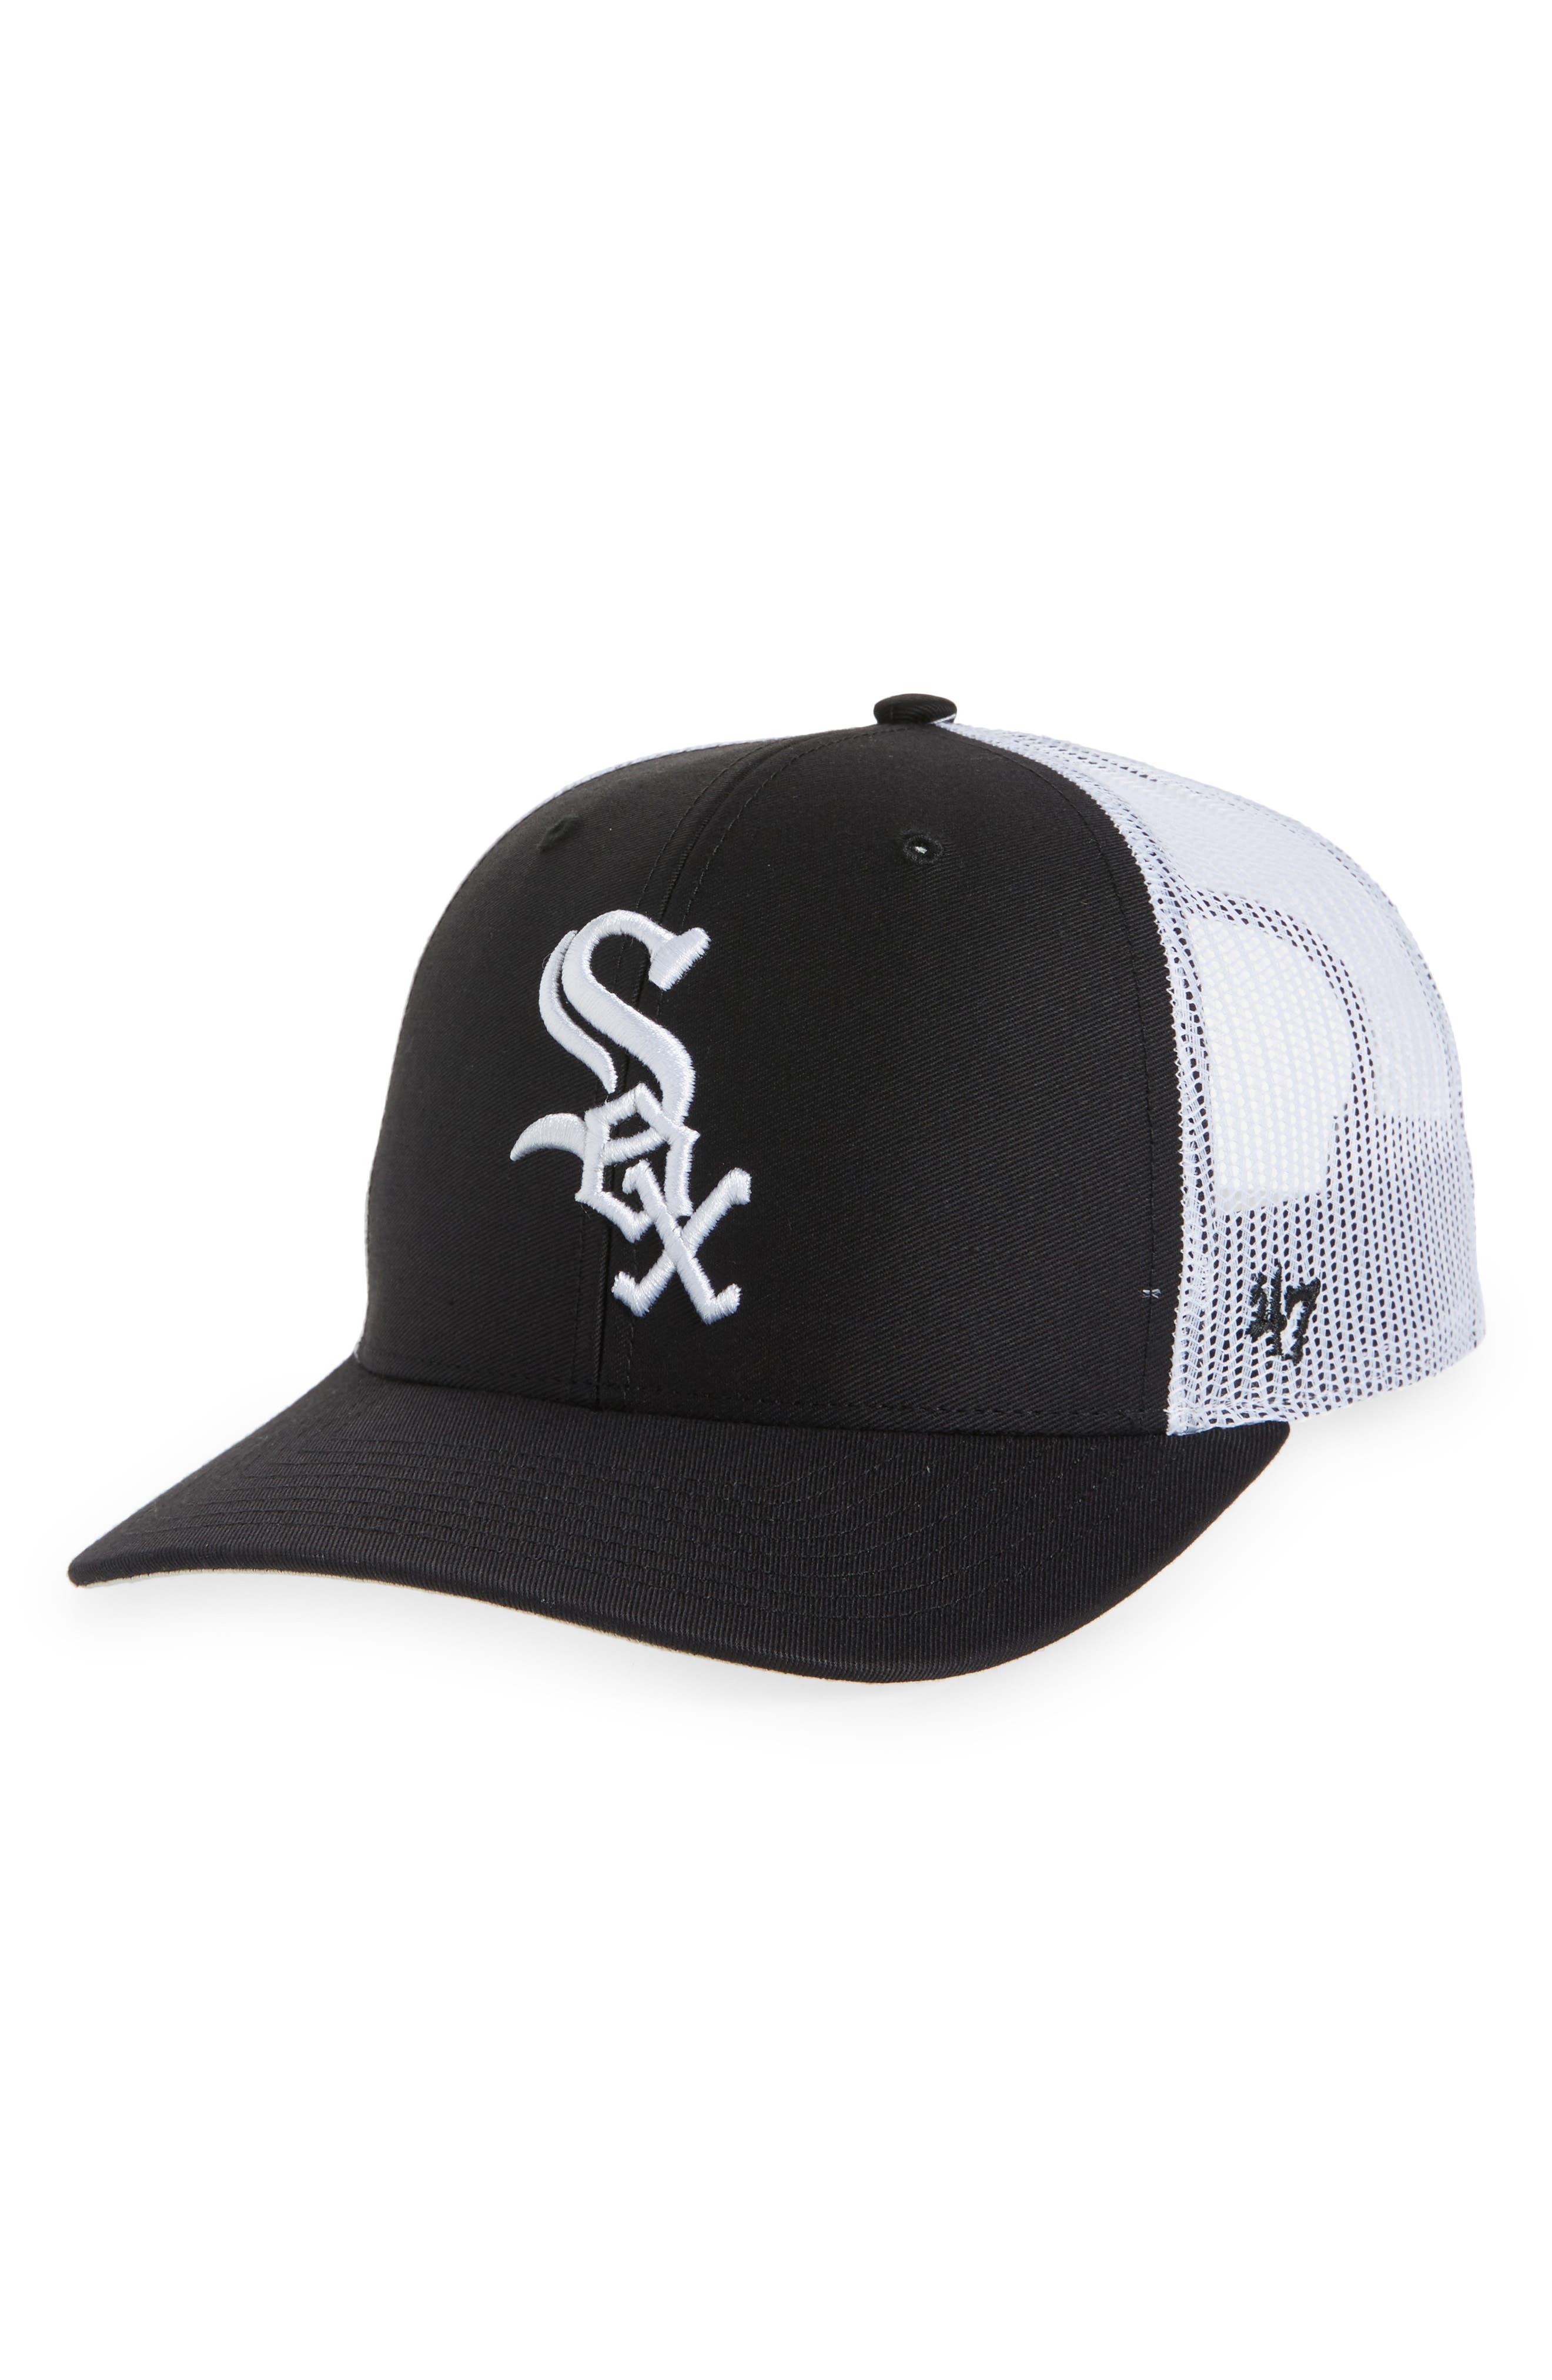 Smoke Dear Casquette Snapback Hat Adjustable Solid Flat Bill Baseball Caps Mens Black